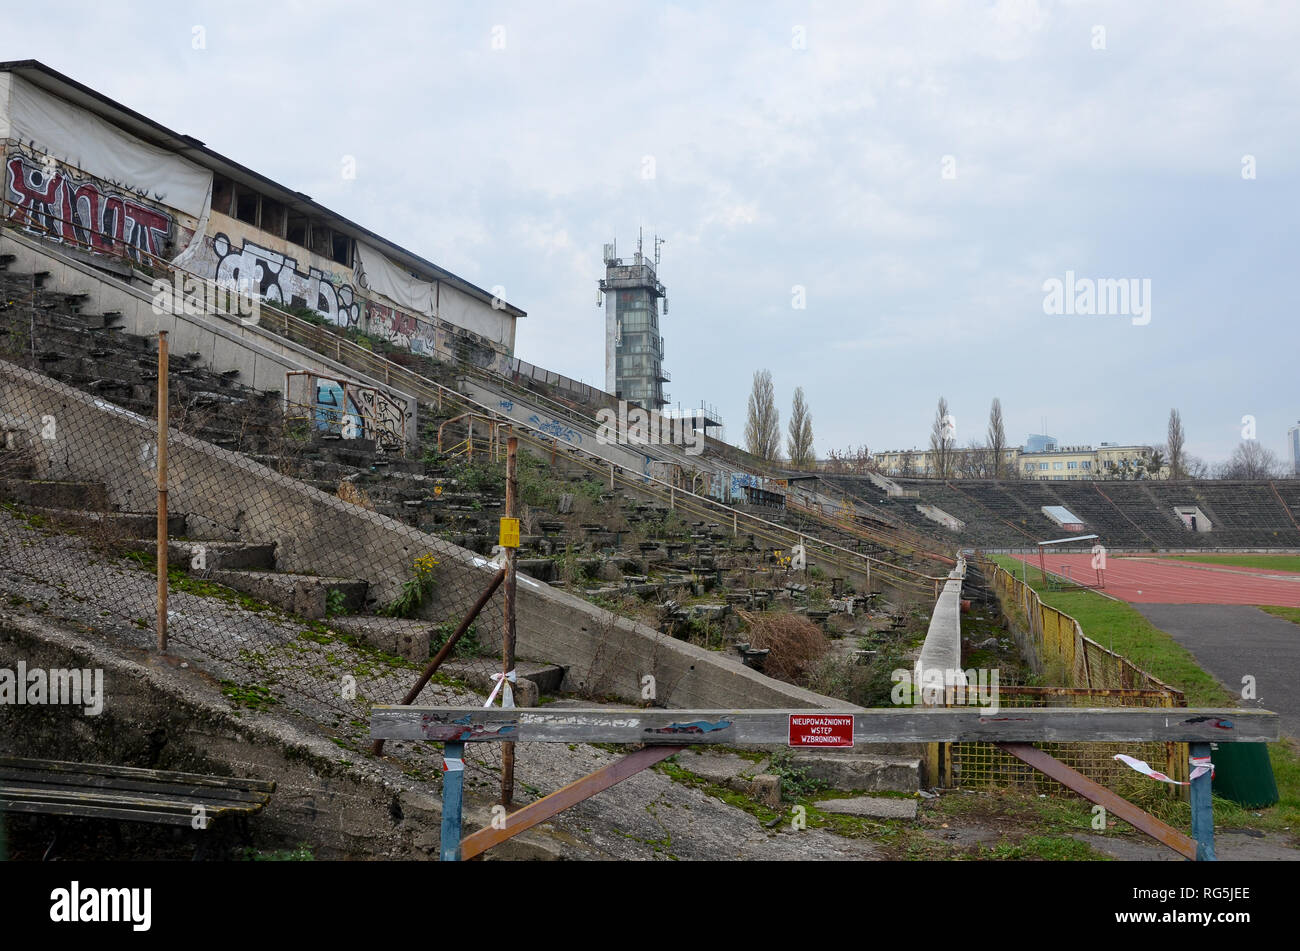 RKS Skra Stadium, Warschau, Polen, November 2018 Stockfoto